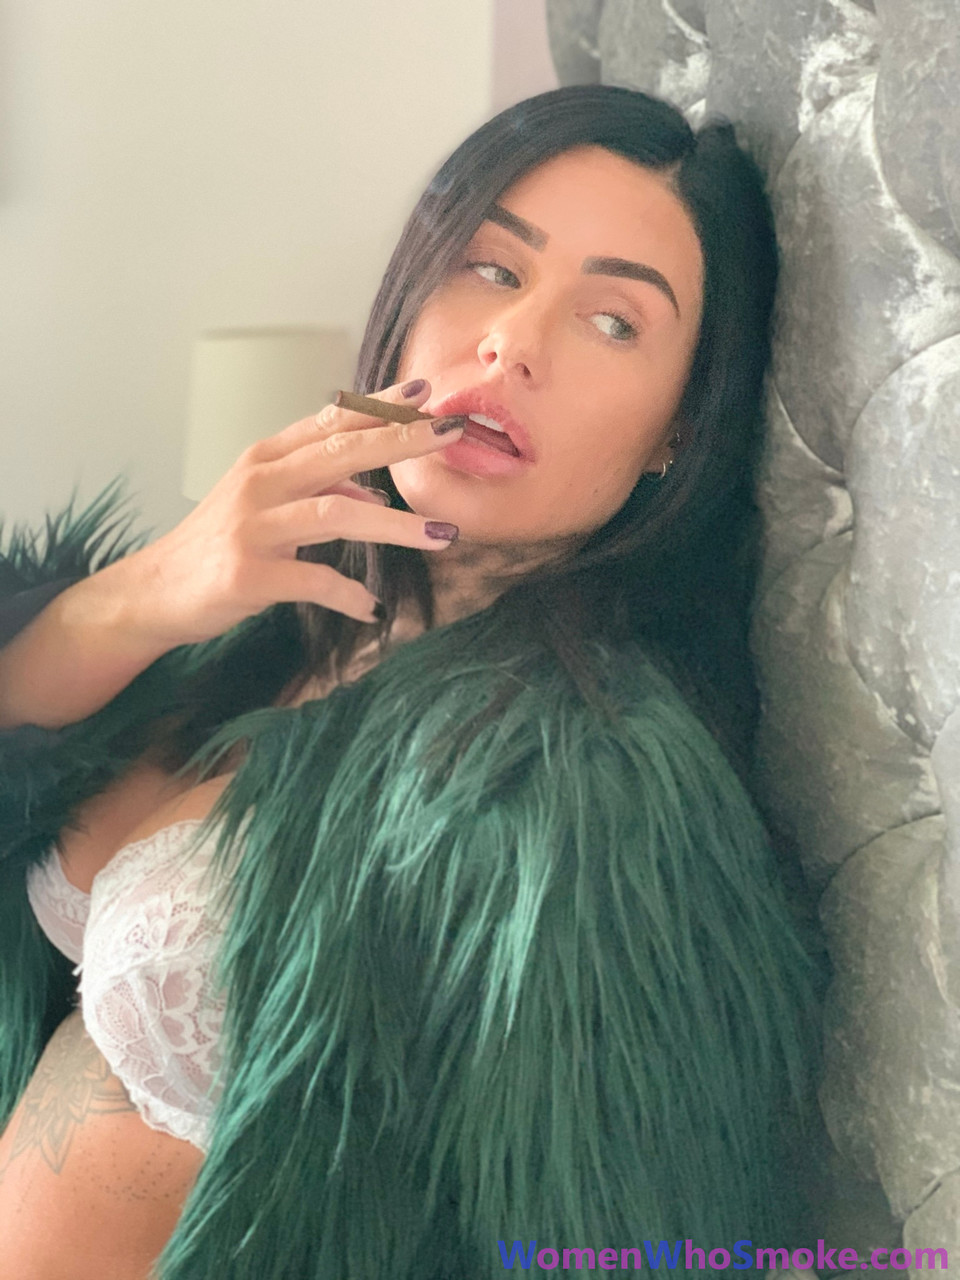 Stunning brunette teases with her big boobs while smoking in sexy lingerie foto pornográfica #426607869 | Women Who Smoke Pics, Smoking, pornografia móvel